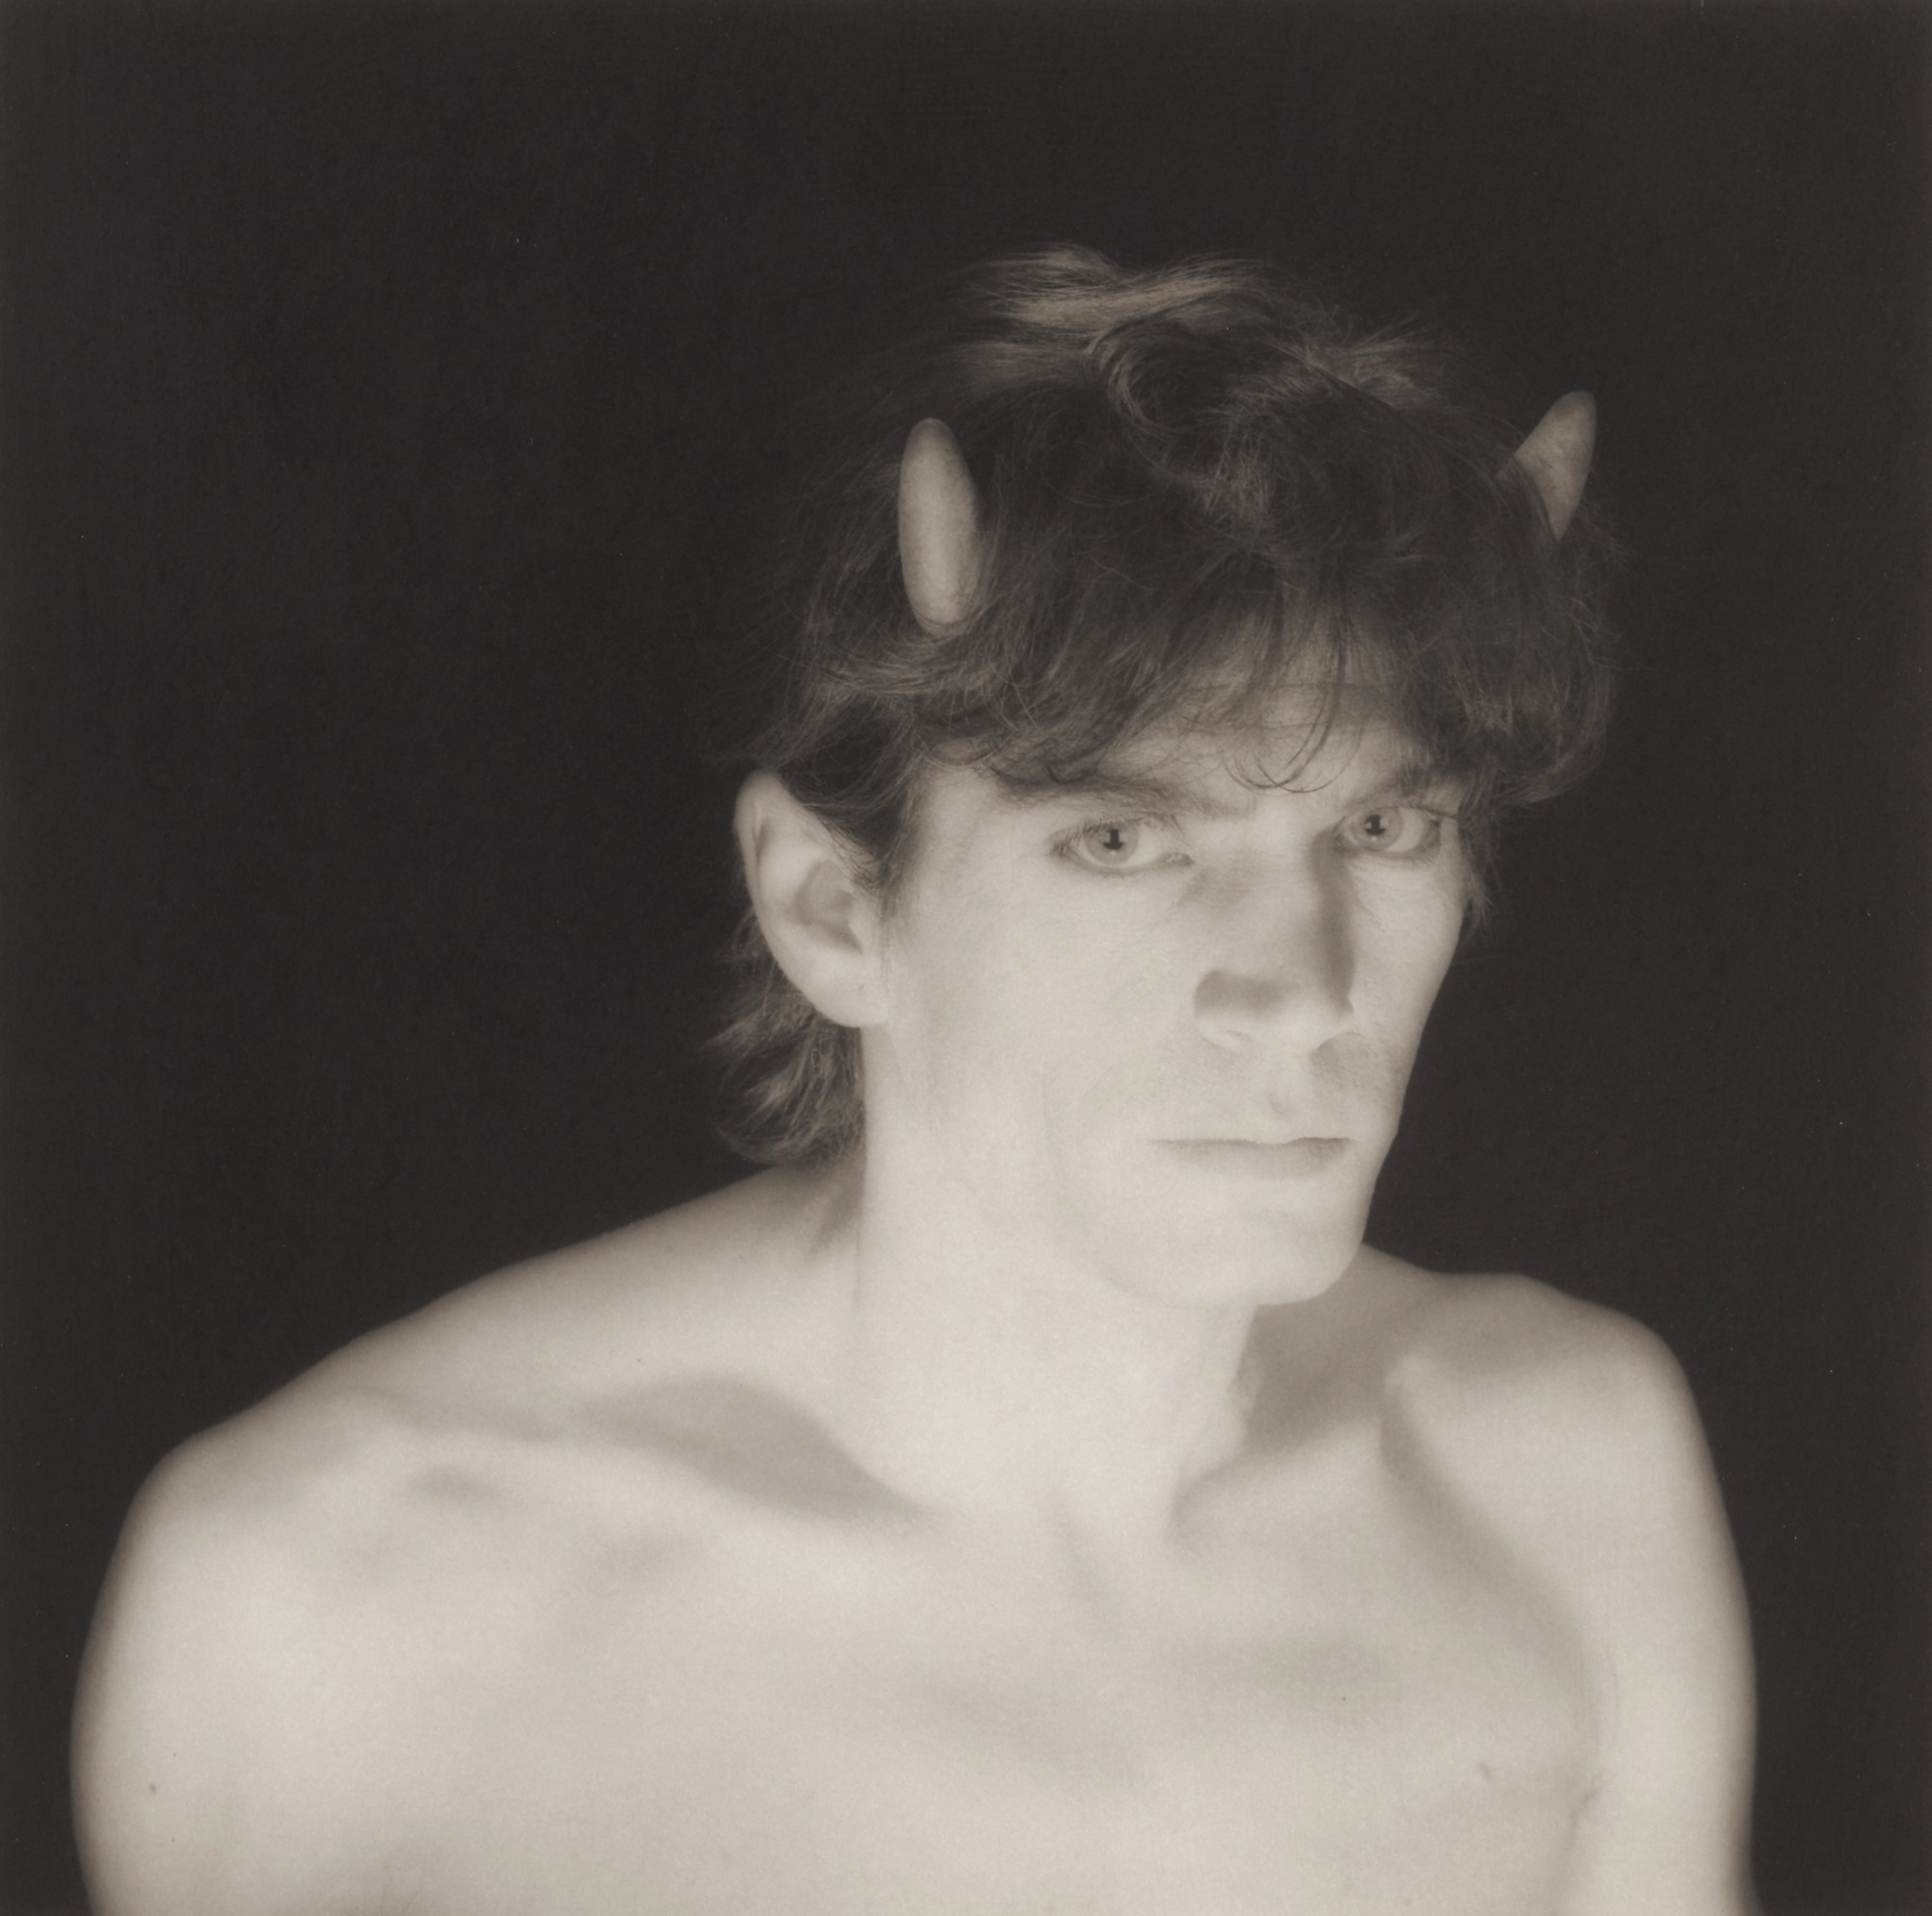 Self Portrait by Robert Mapplethorpe, 1985